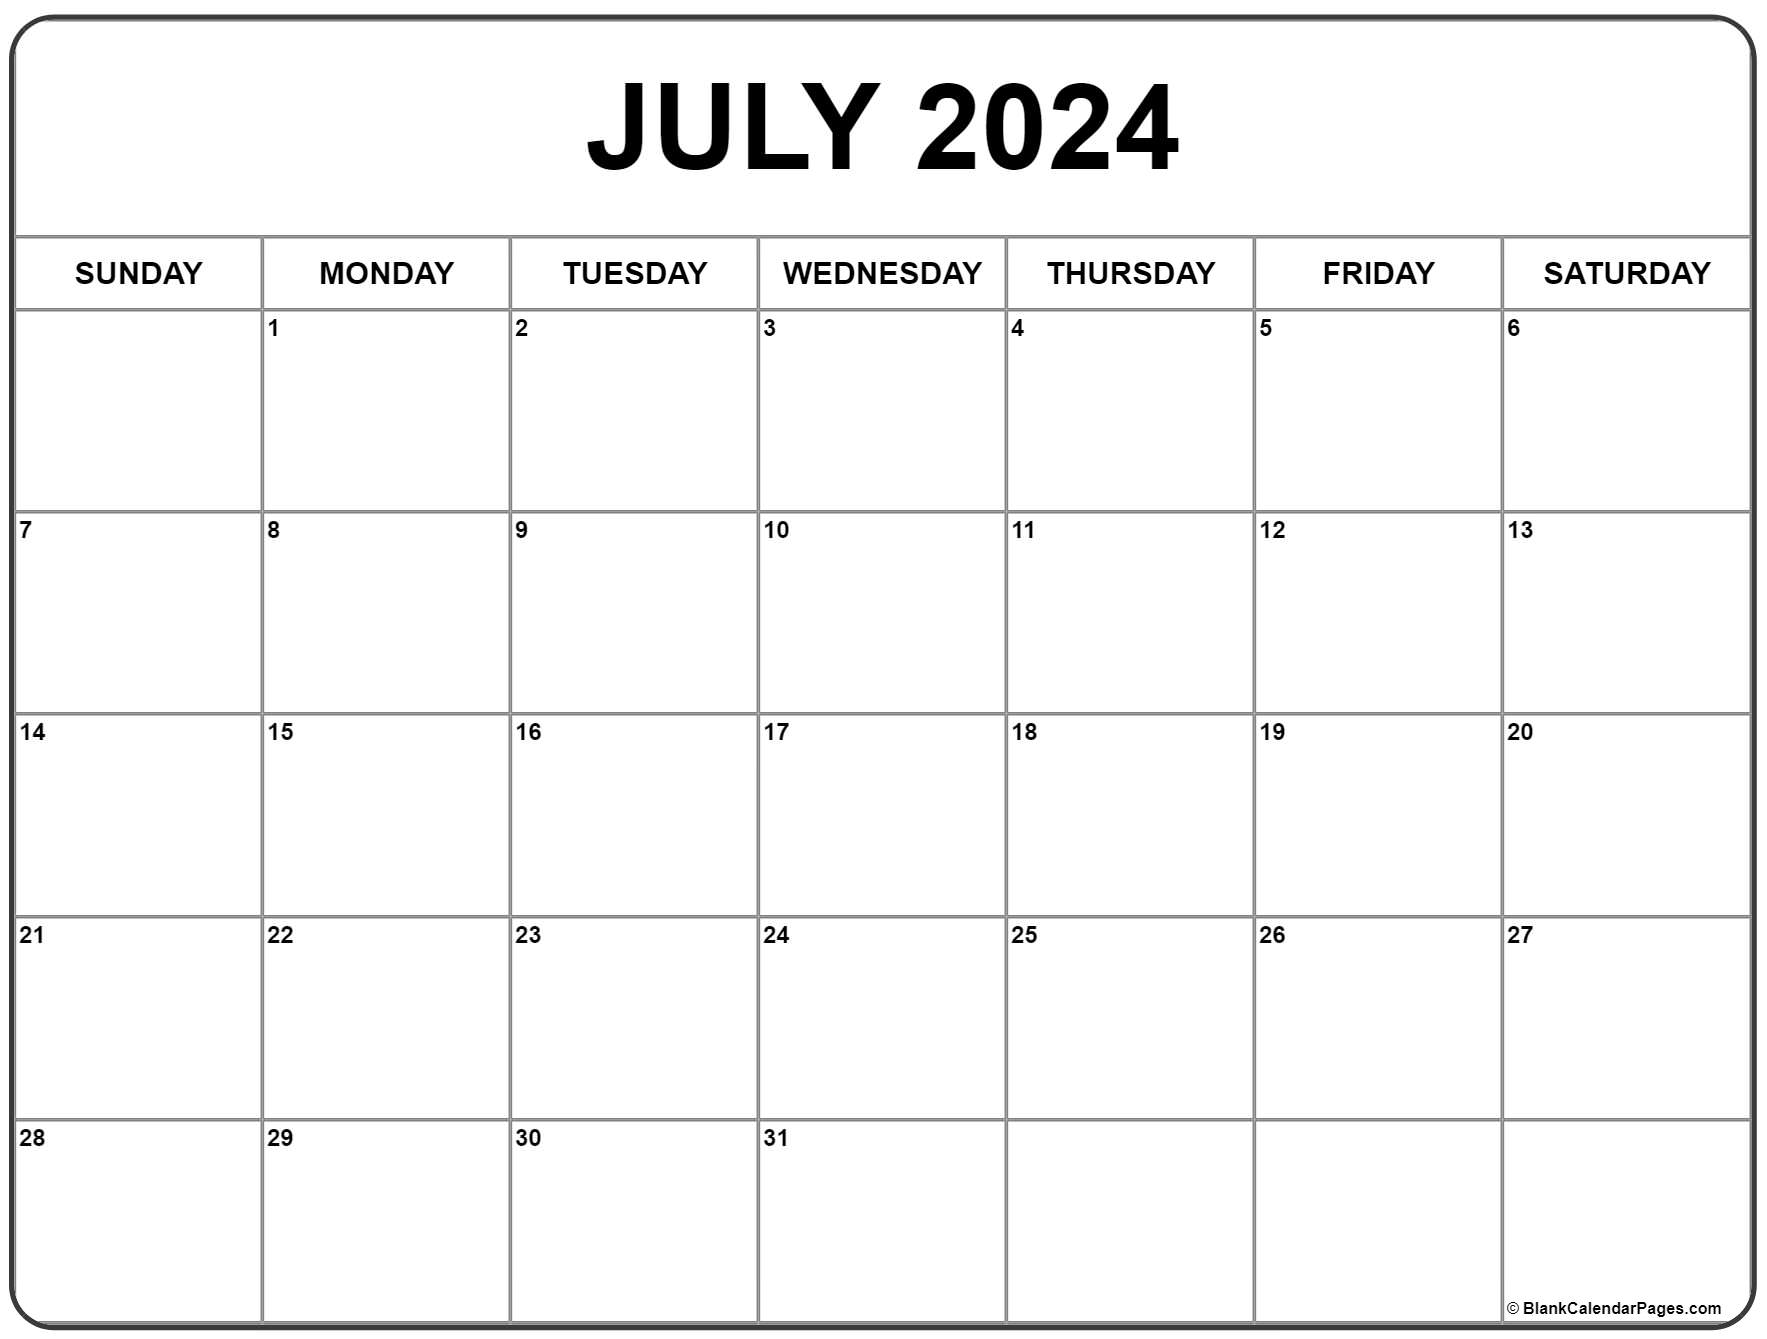 Free Calendar July 2022 July 2022 Calendar | Free Printable Calendar Templates